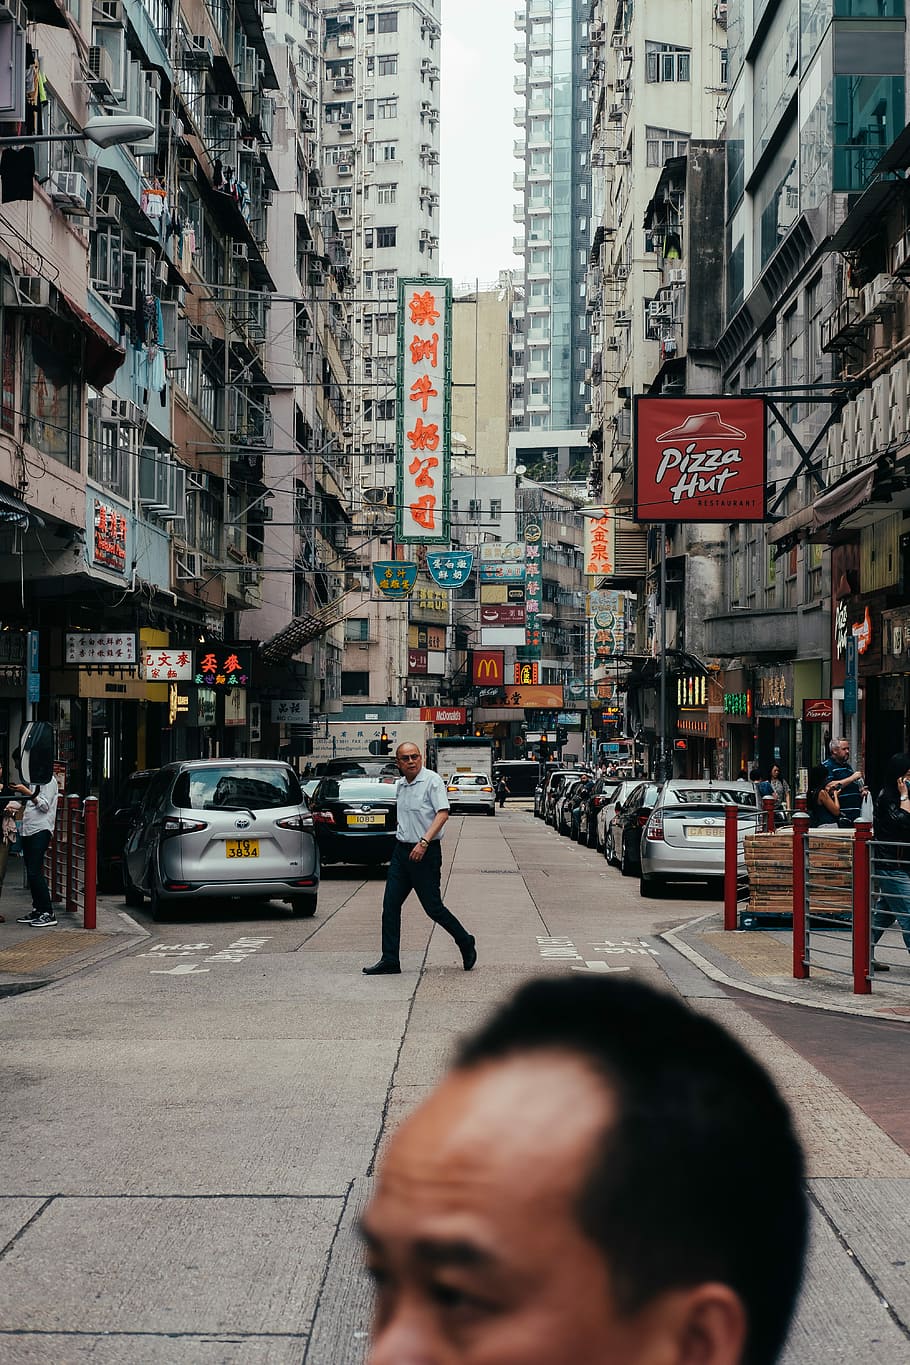 man in white shirt standing near gray car, tourist, touism, person